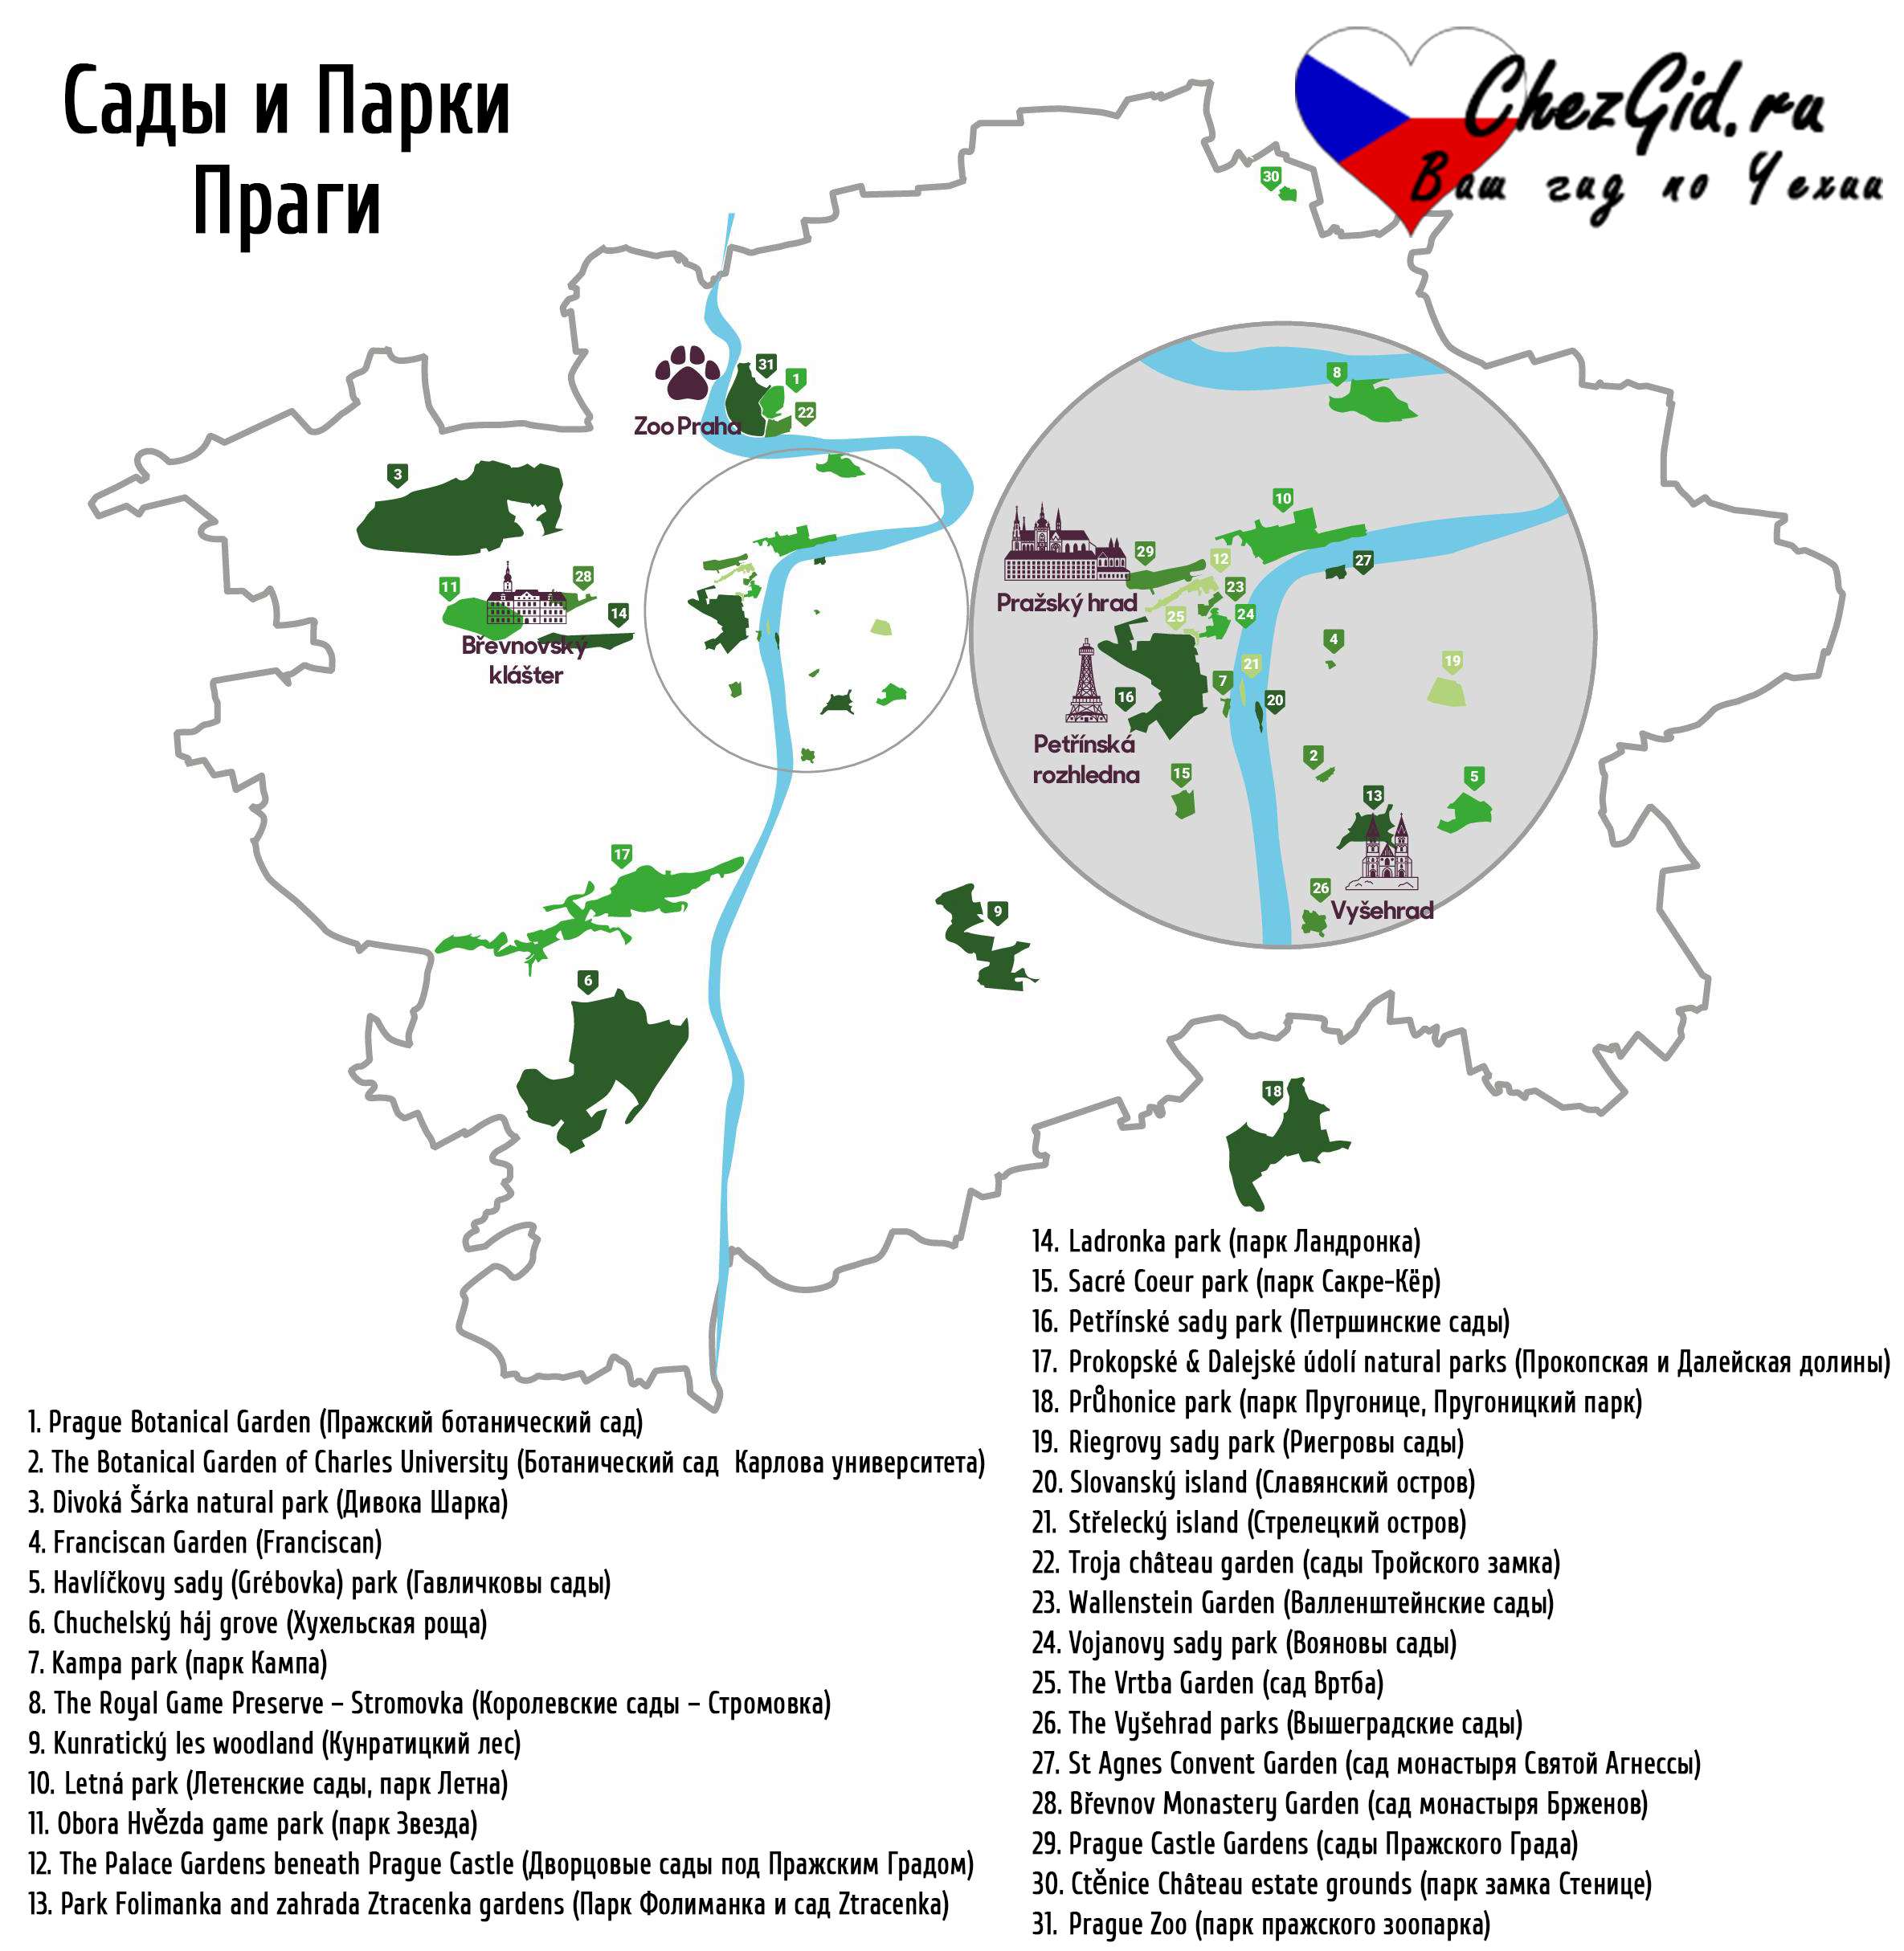 Сады и парки Праги на карте города